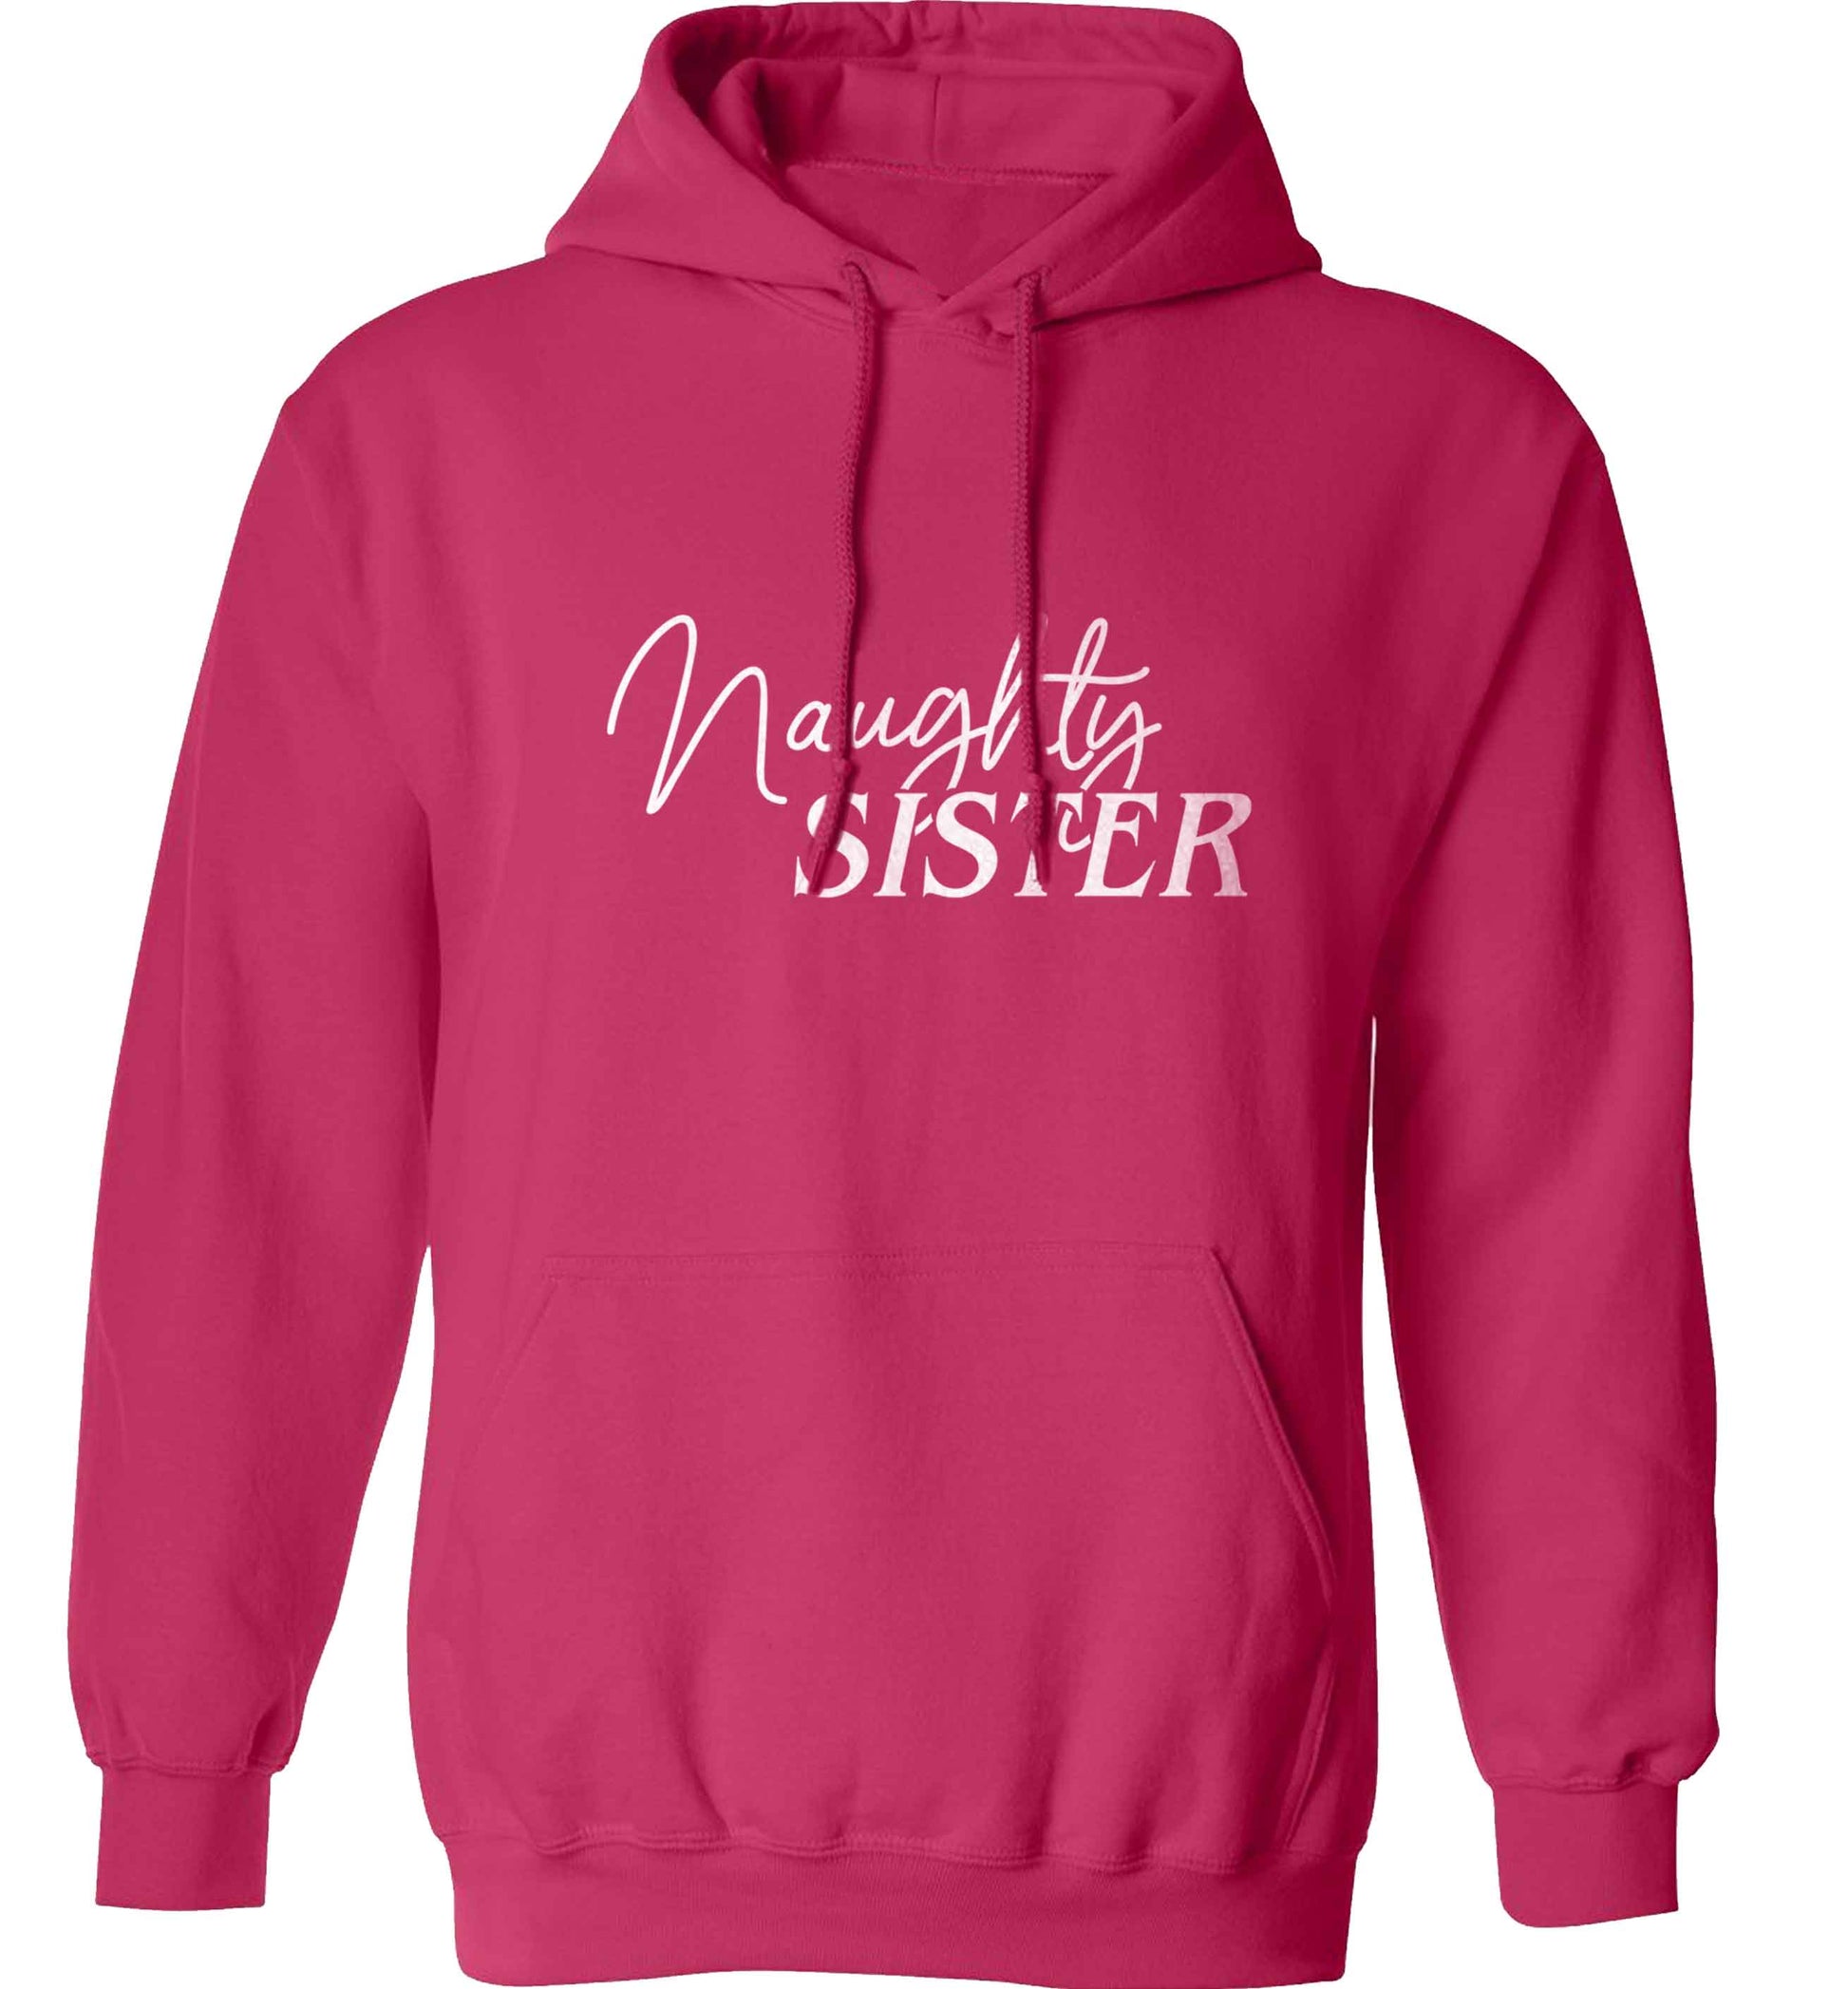 Naughty Sister adults unisex pink hoodie 2XL